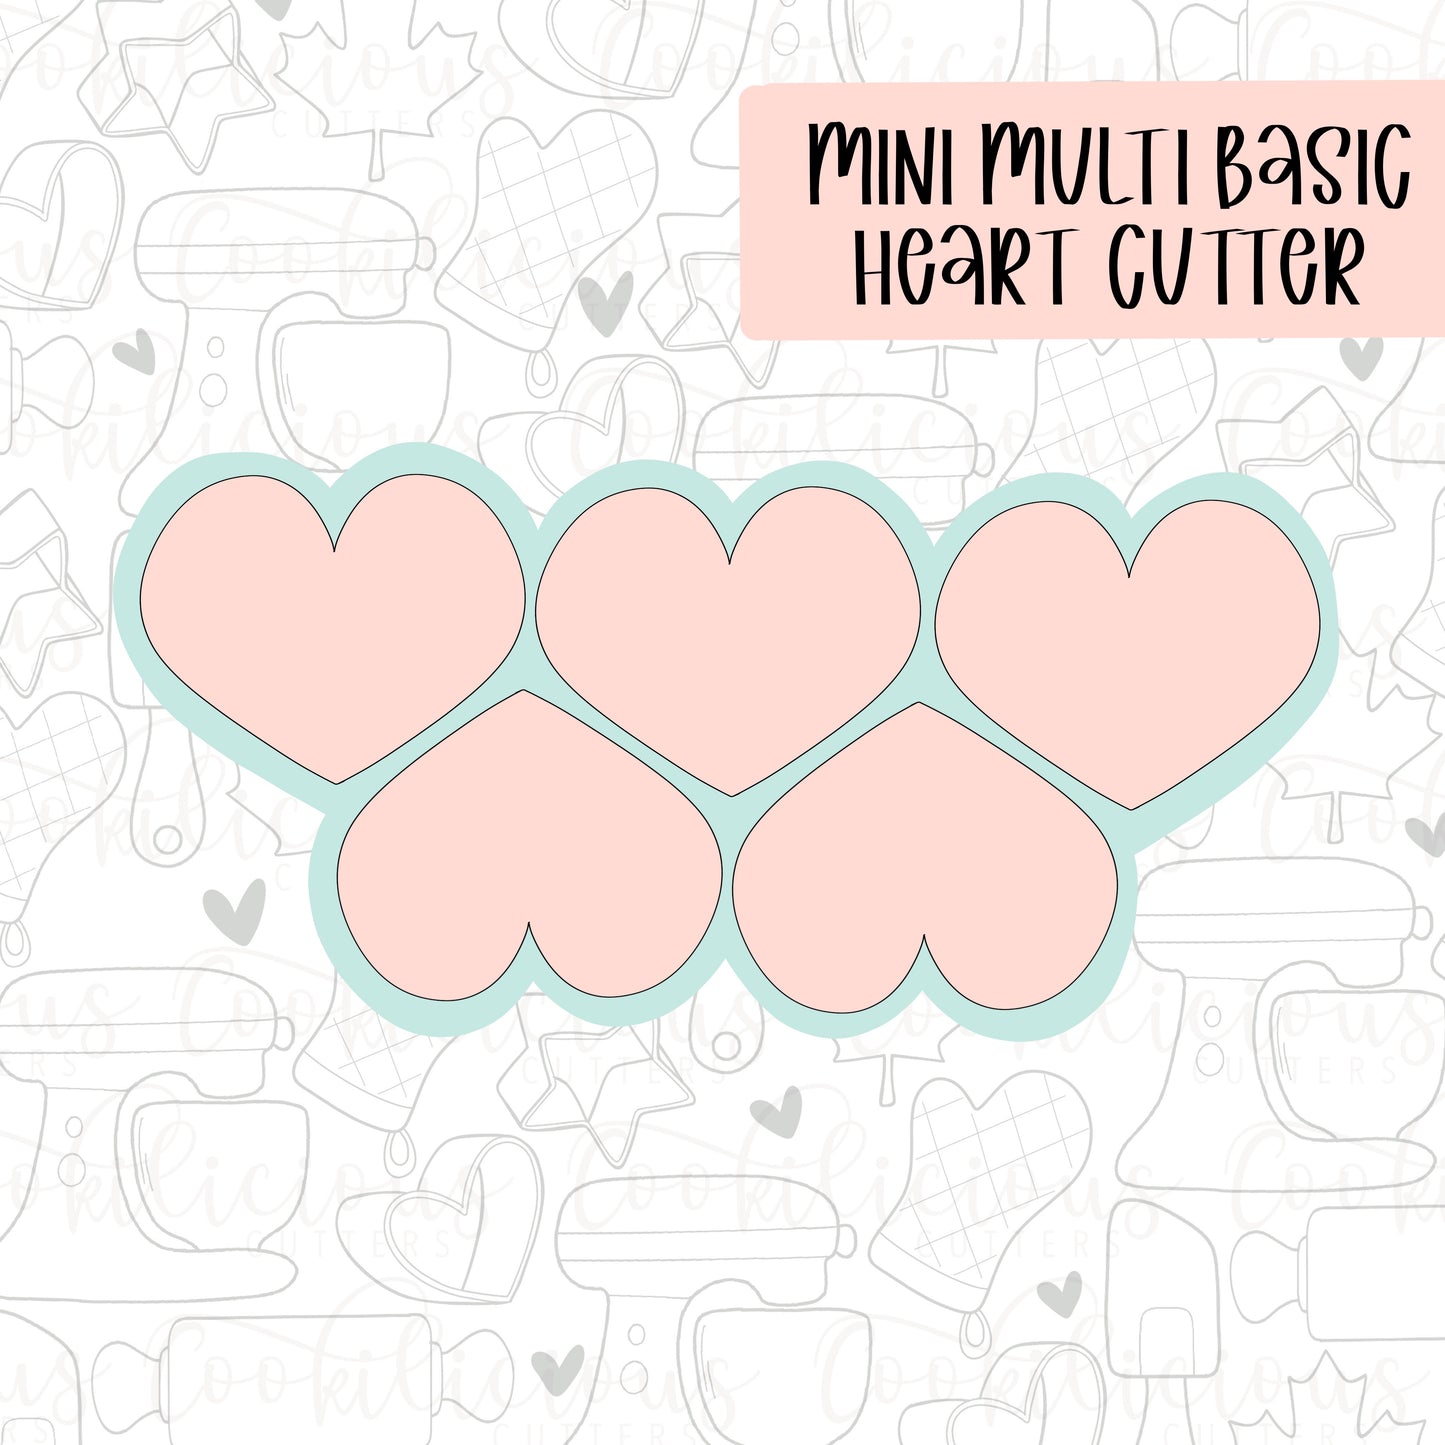 Multi Basic Heart Cutter